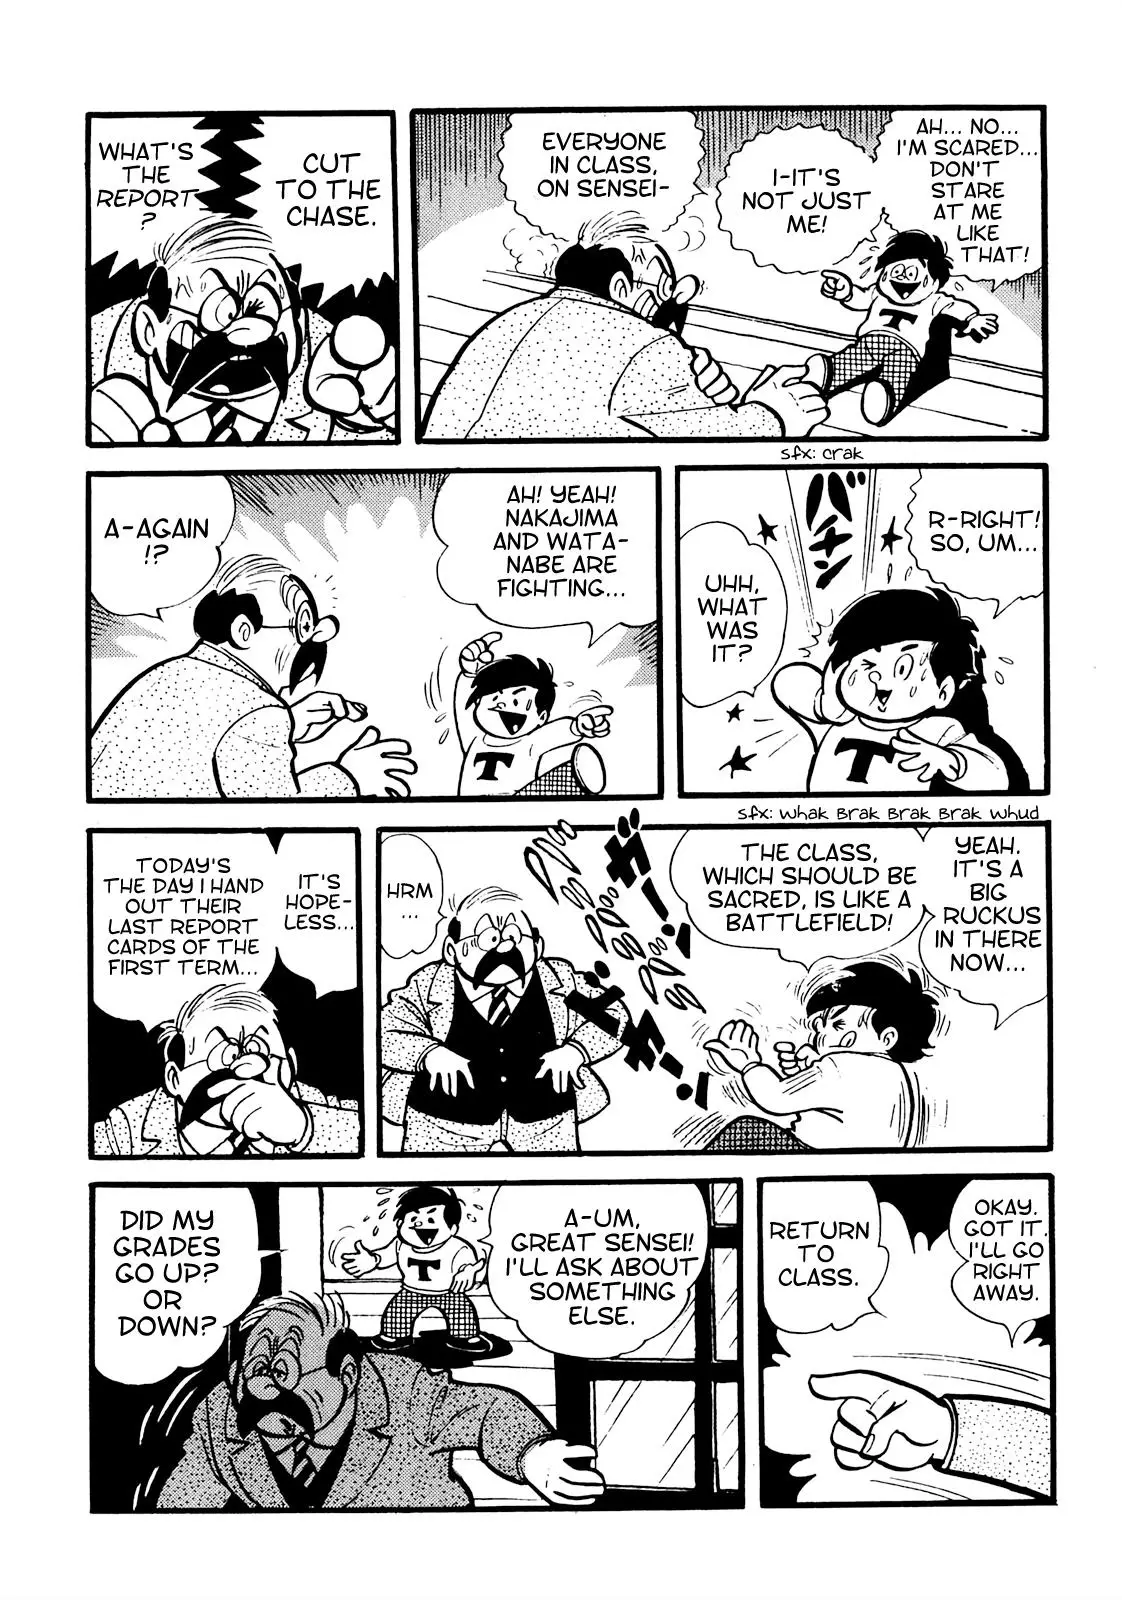 Tetsuya Chiba Short Stories - Shojo Manga - 1 page 7-b4092307